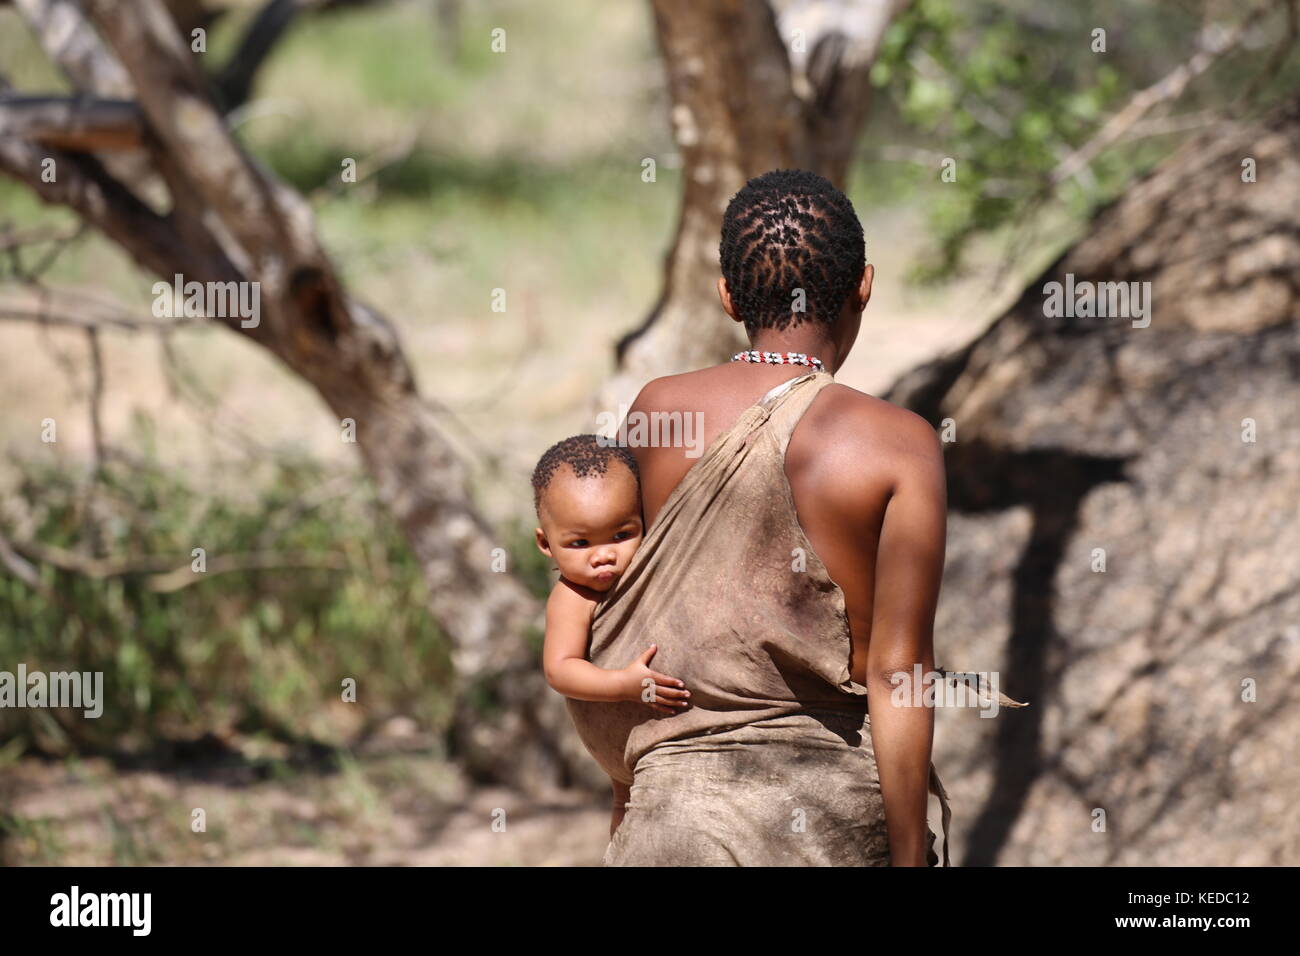 San Buschmänner persone in Namibia - Volksstamm - Donna con bambino Foto Stock